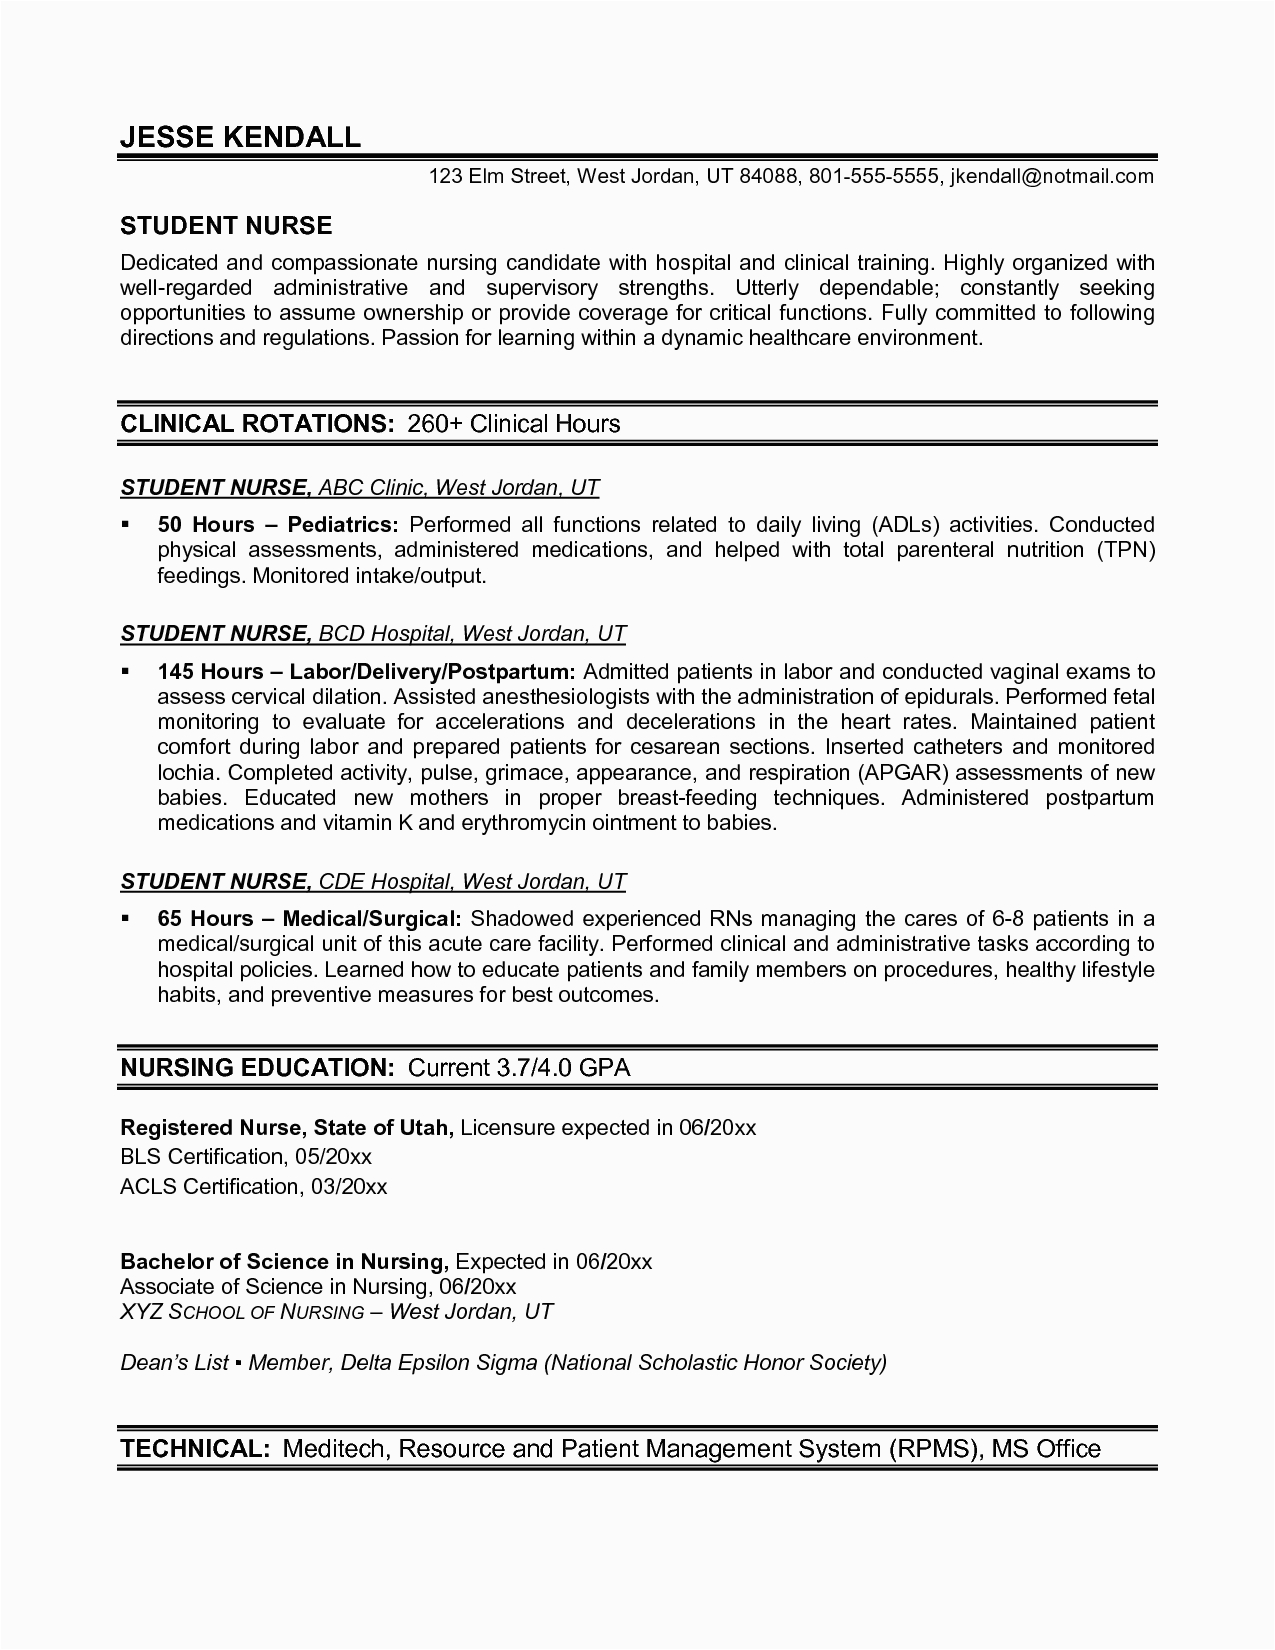 Sample Resume Registered Nurse for Masters Resume Template Nursing Kuokim Template